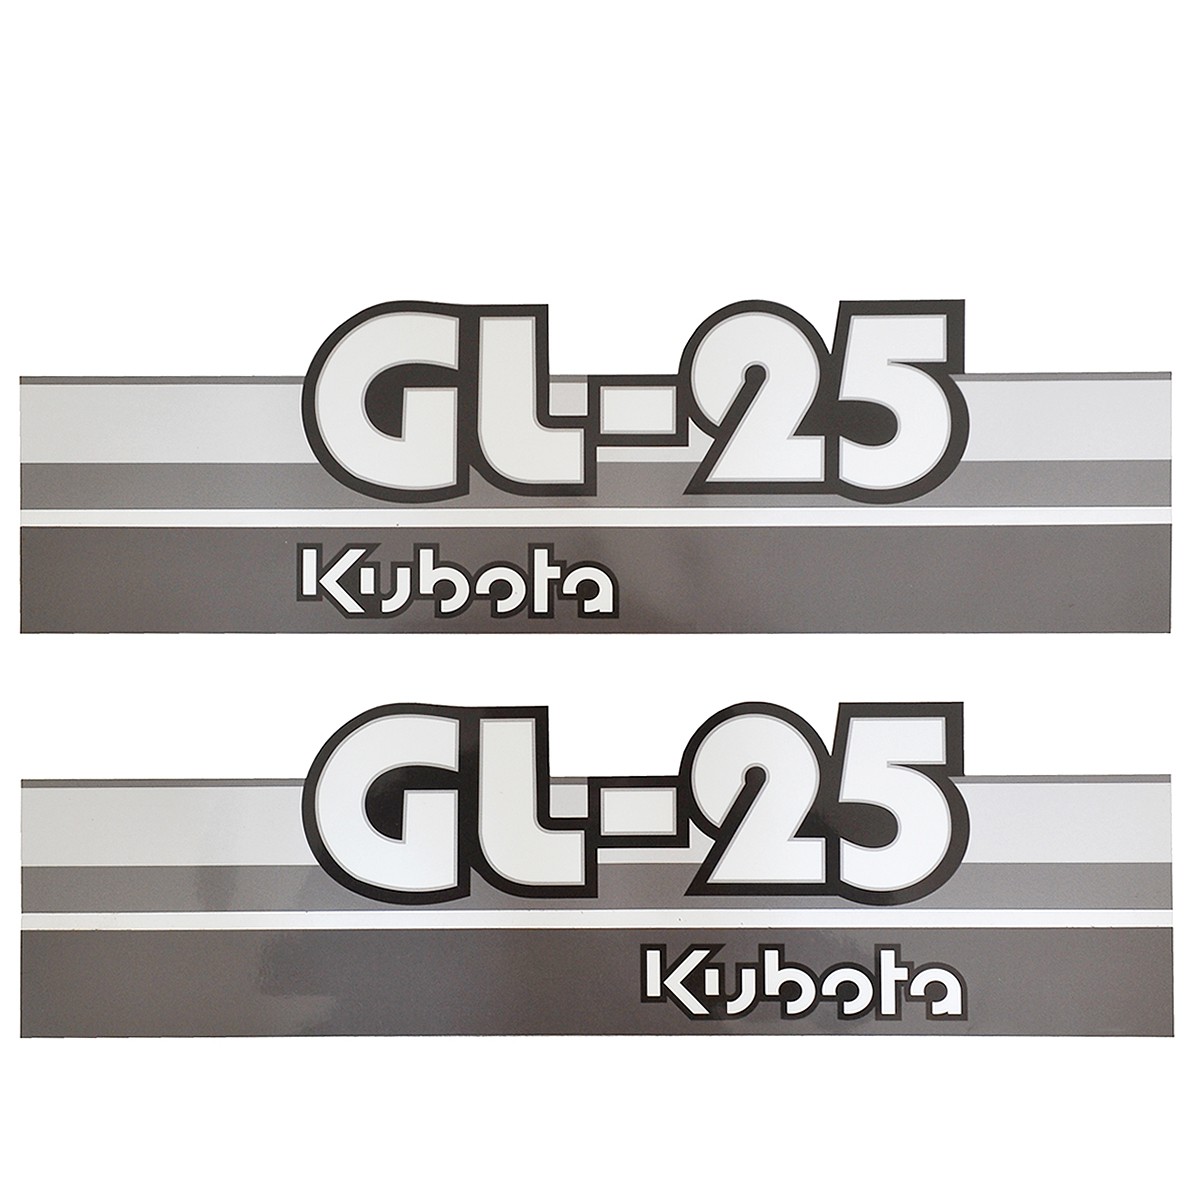 Kubota GL25 stickers